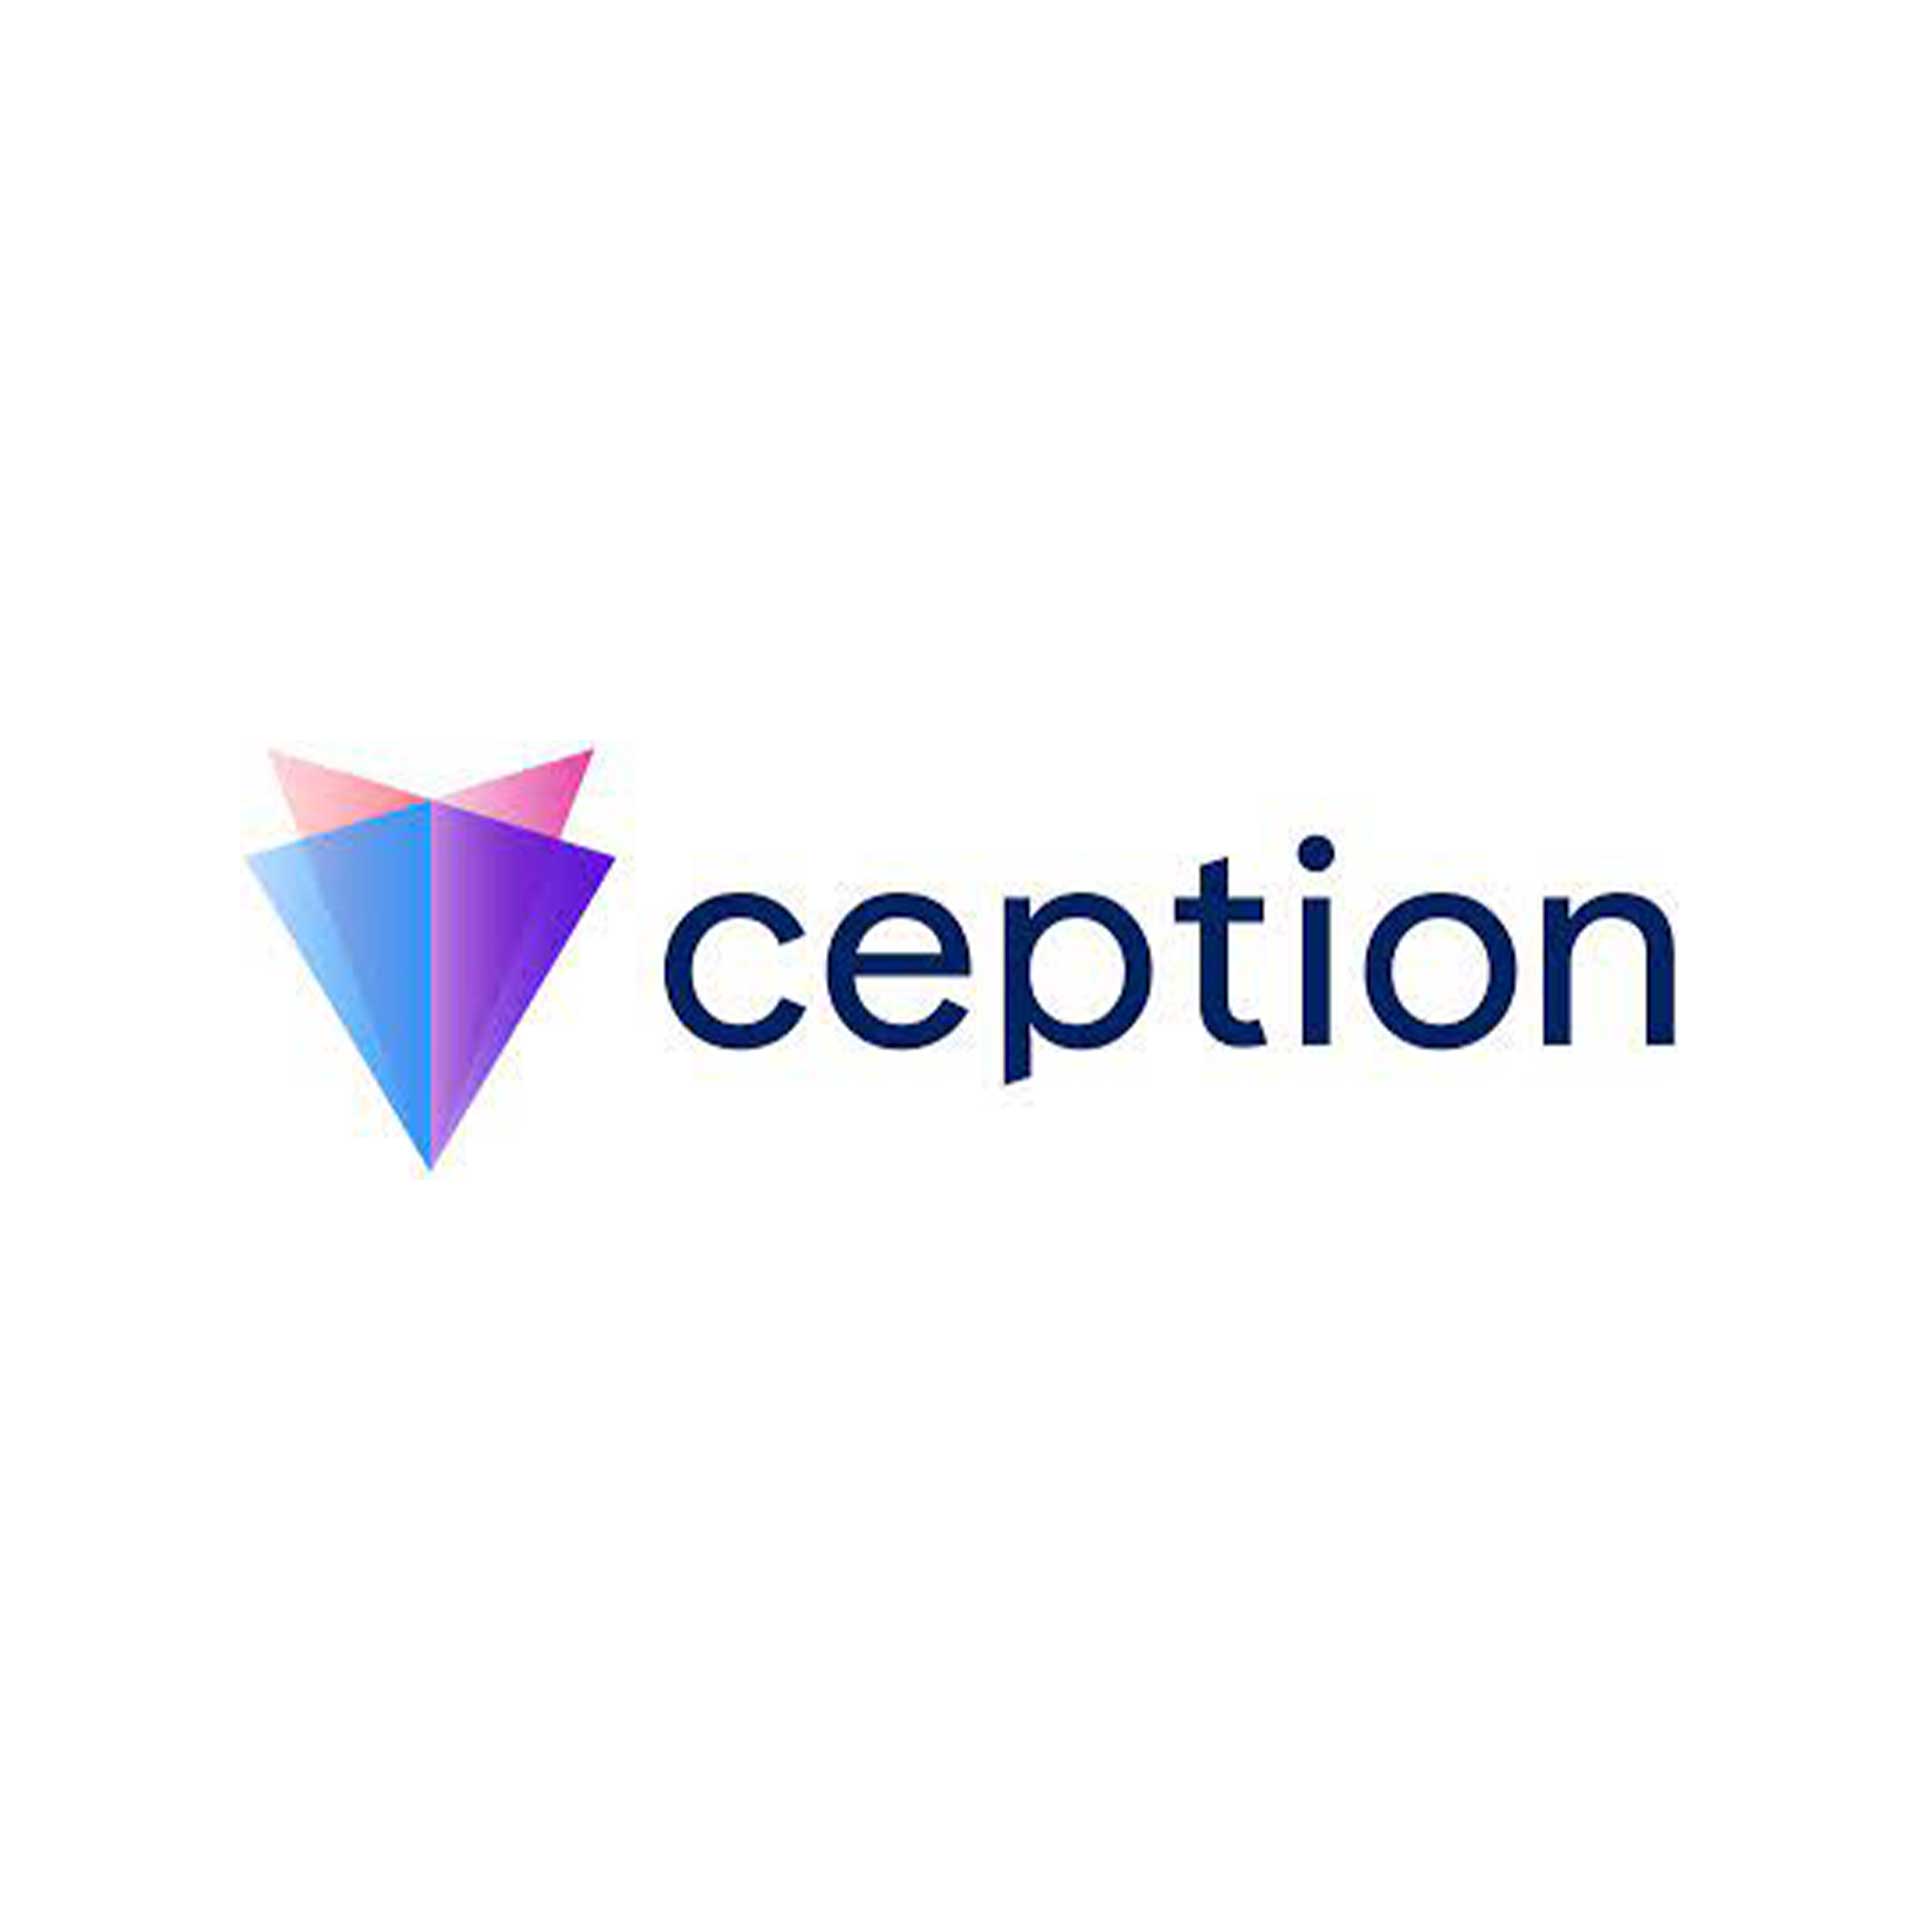 Ception